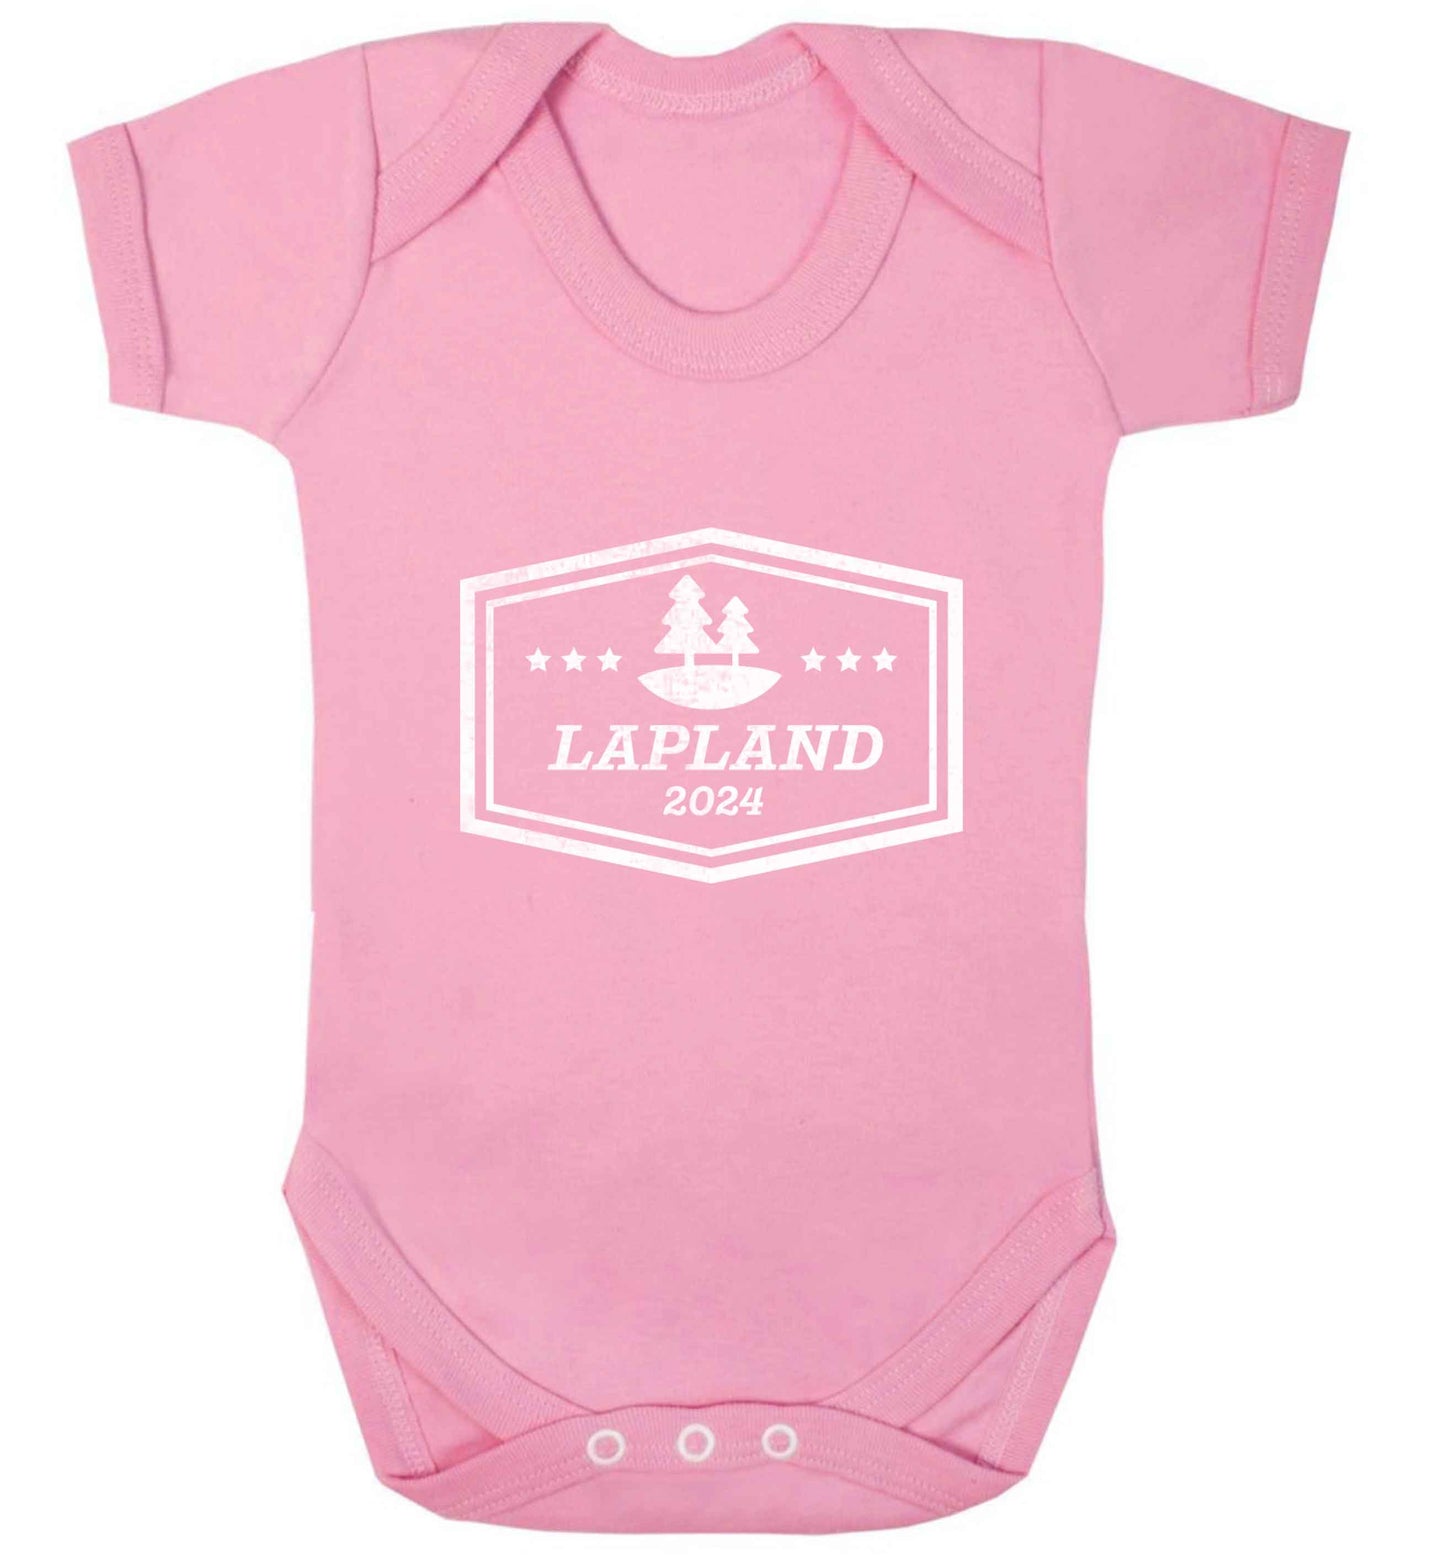 Custom date Lapland baby vest pale pink 18-24 months